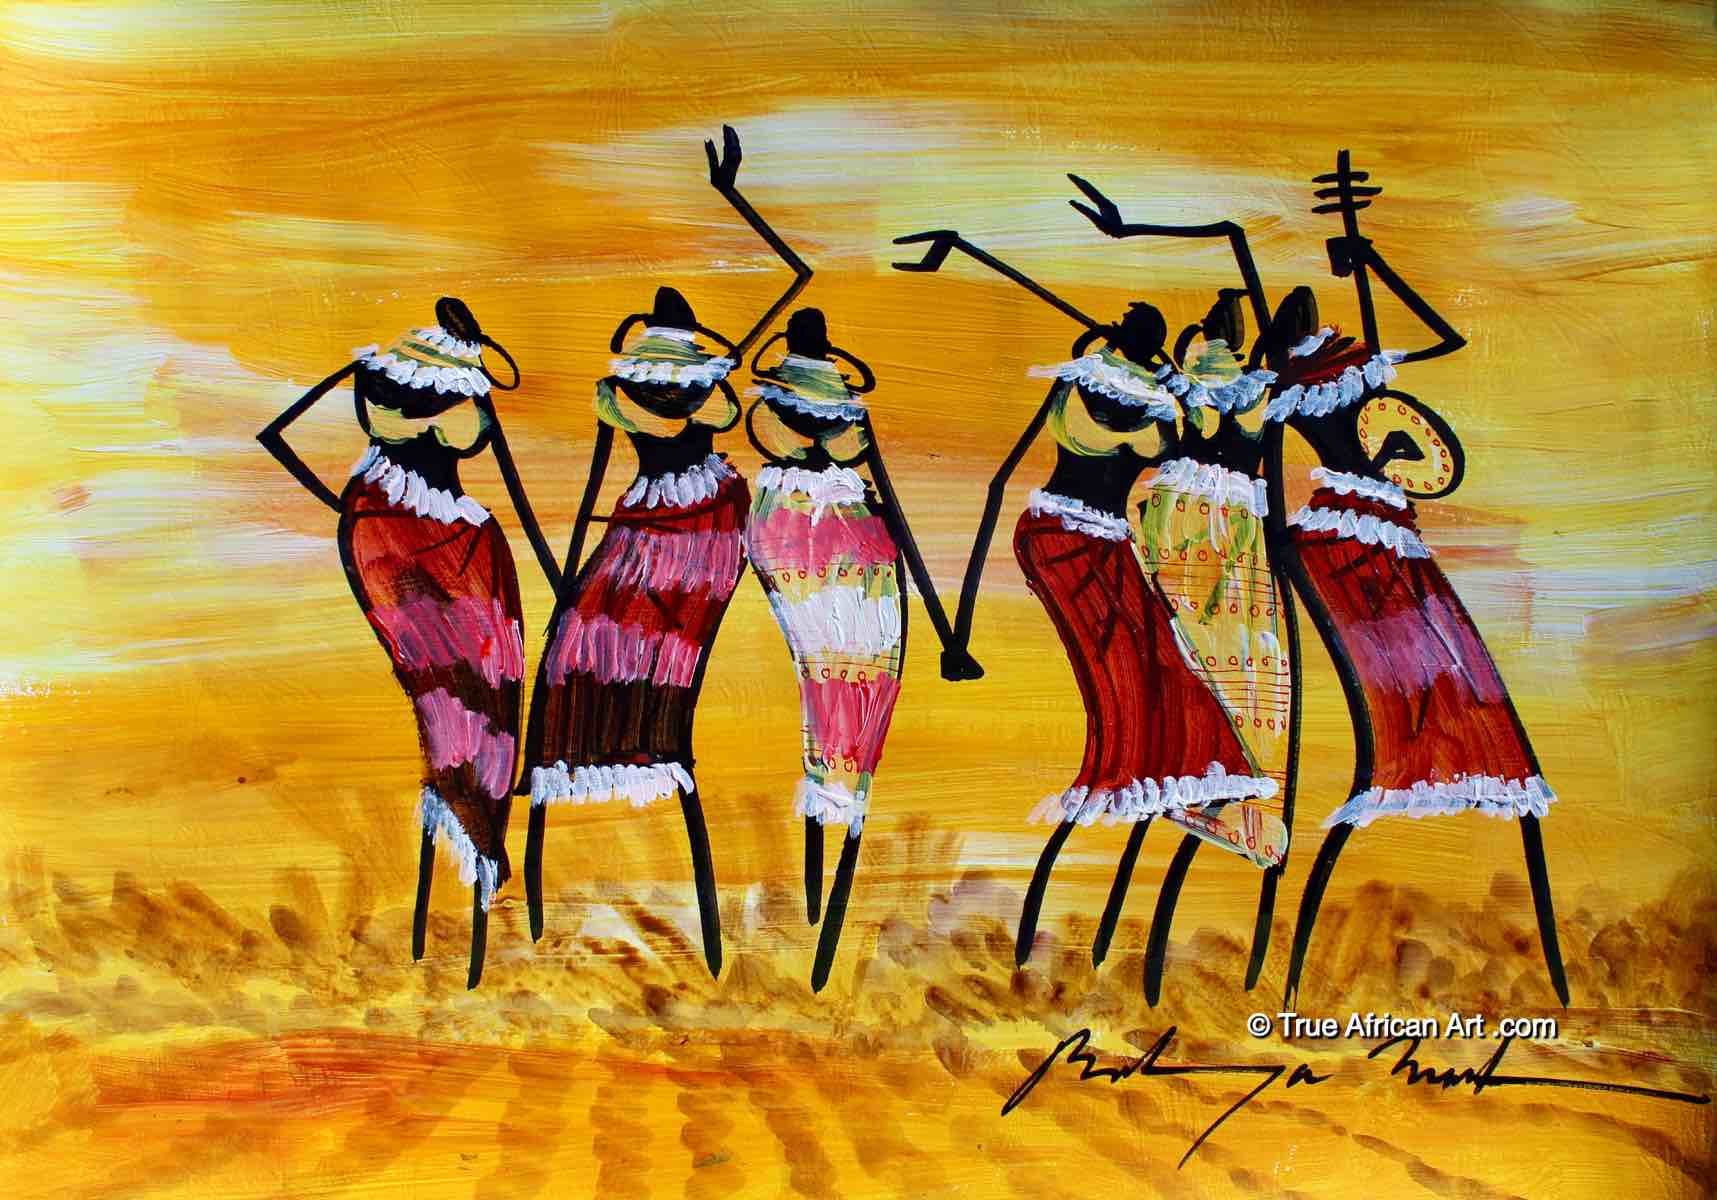 Martin Bulinya | Kenya | "B-542" | Original | True African Art .com